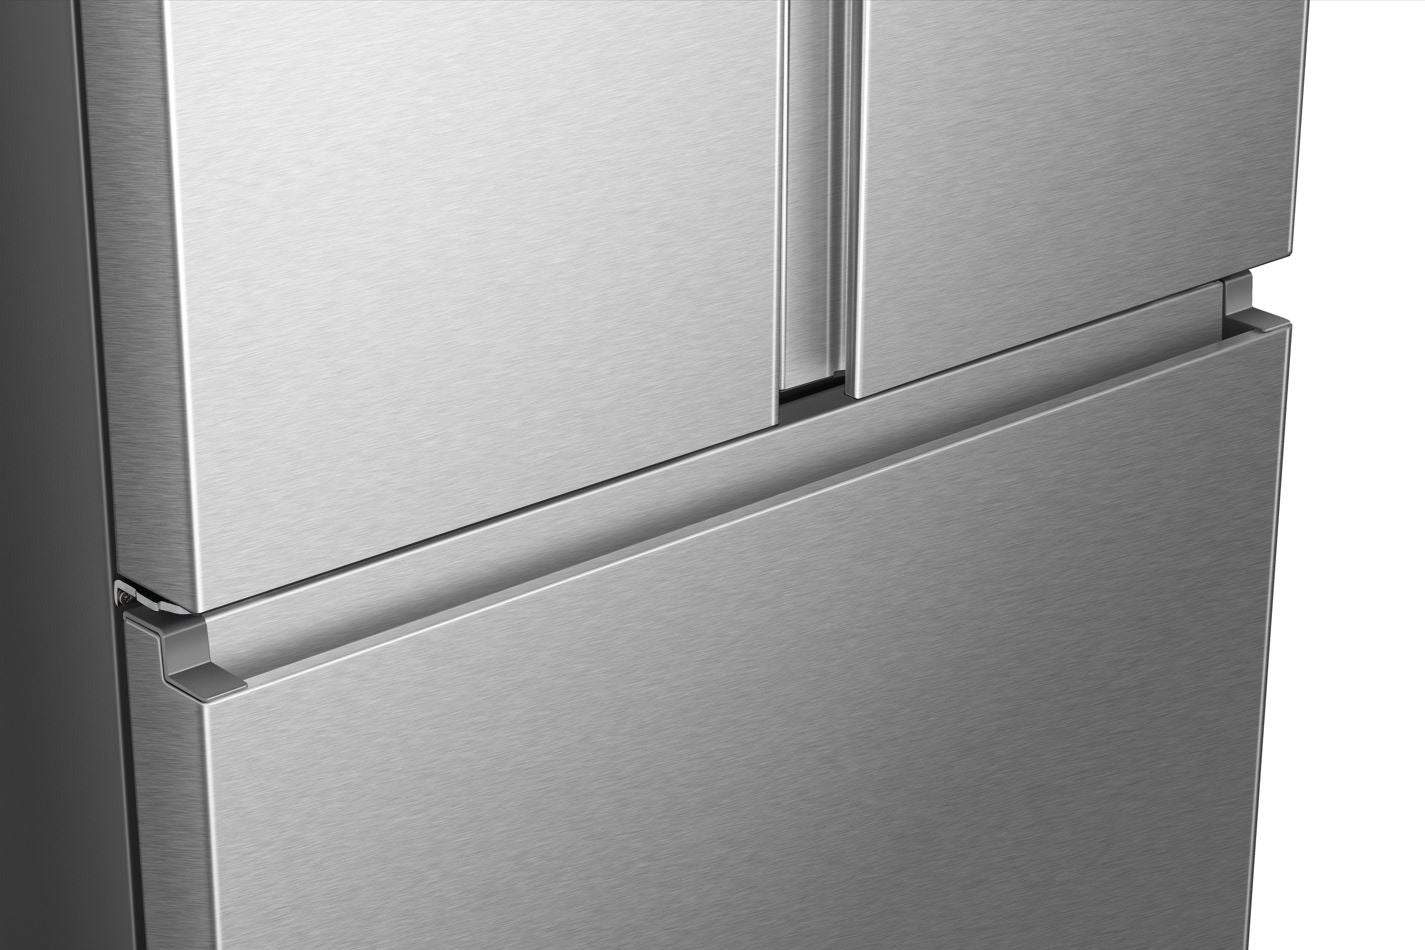 Hisense - 31.3 Inch 22.1 cu. ft French Door Refrigerator in Stainless - RF22B3FSE